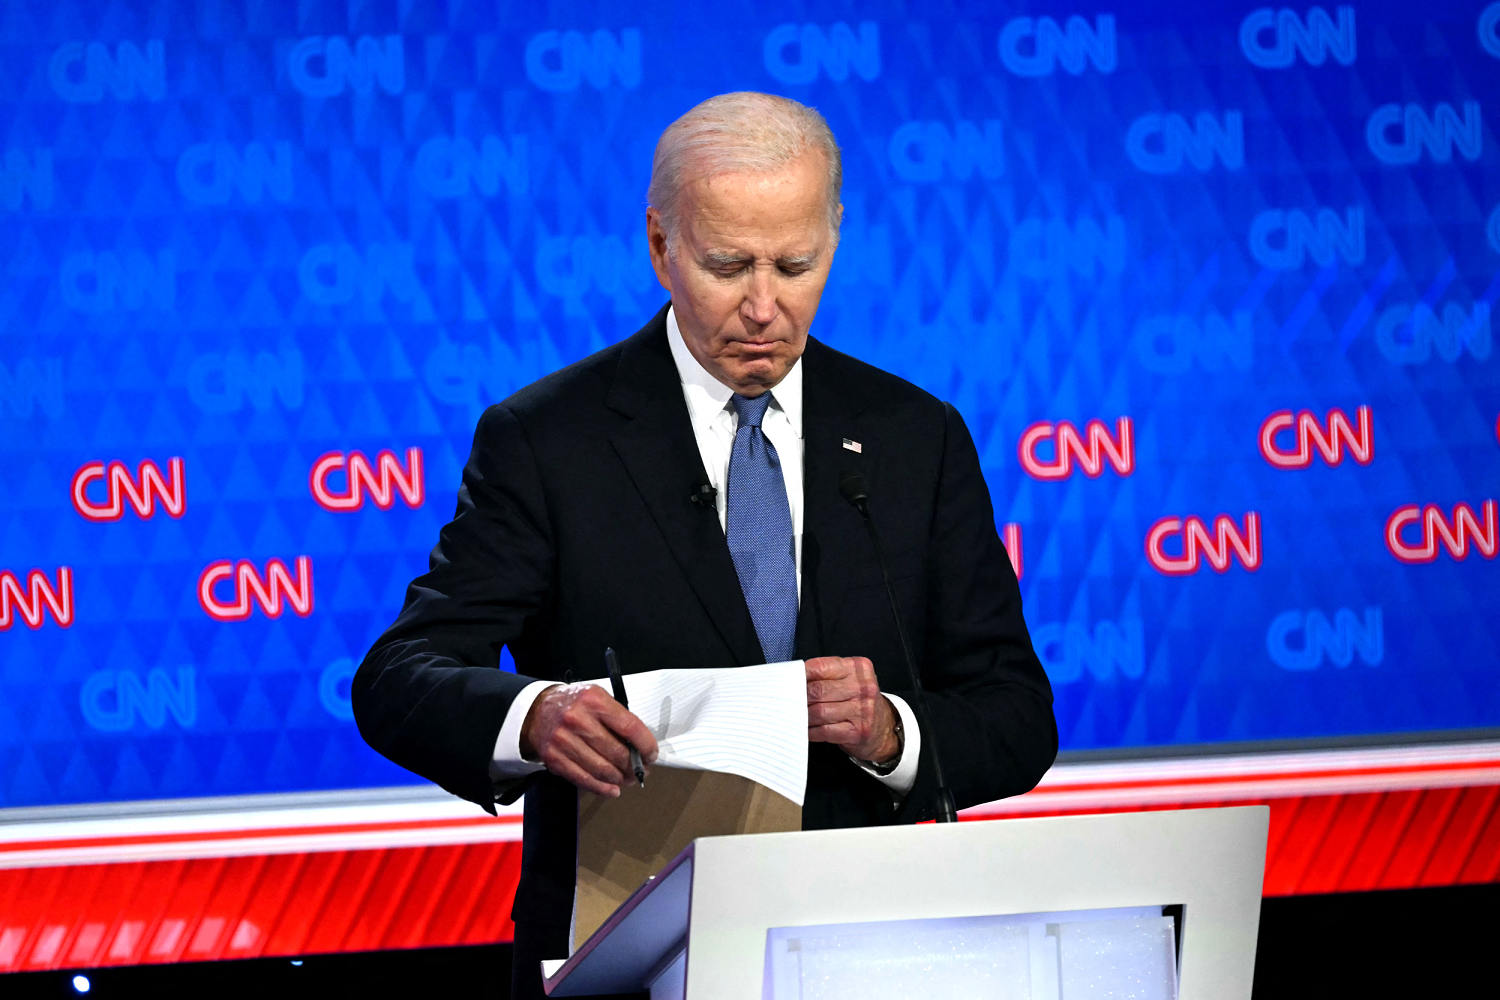 Biden can't blame his bad debate night on Trump